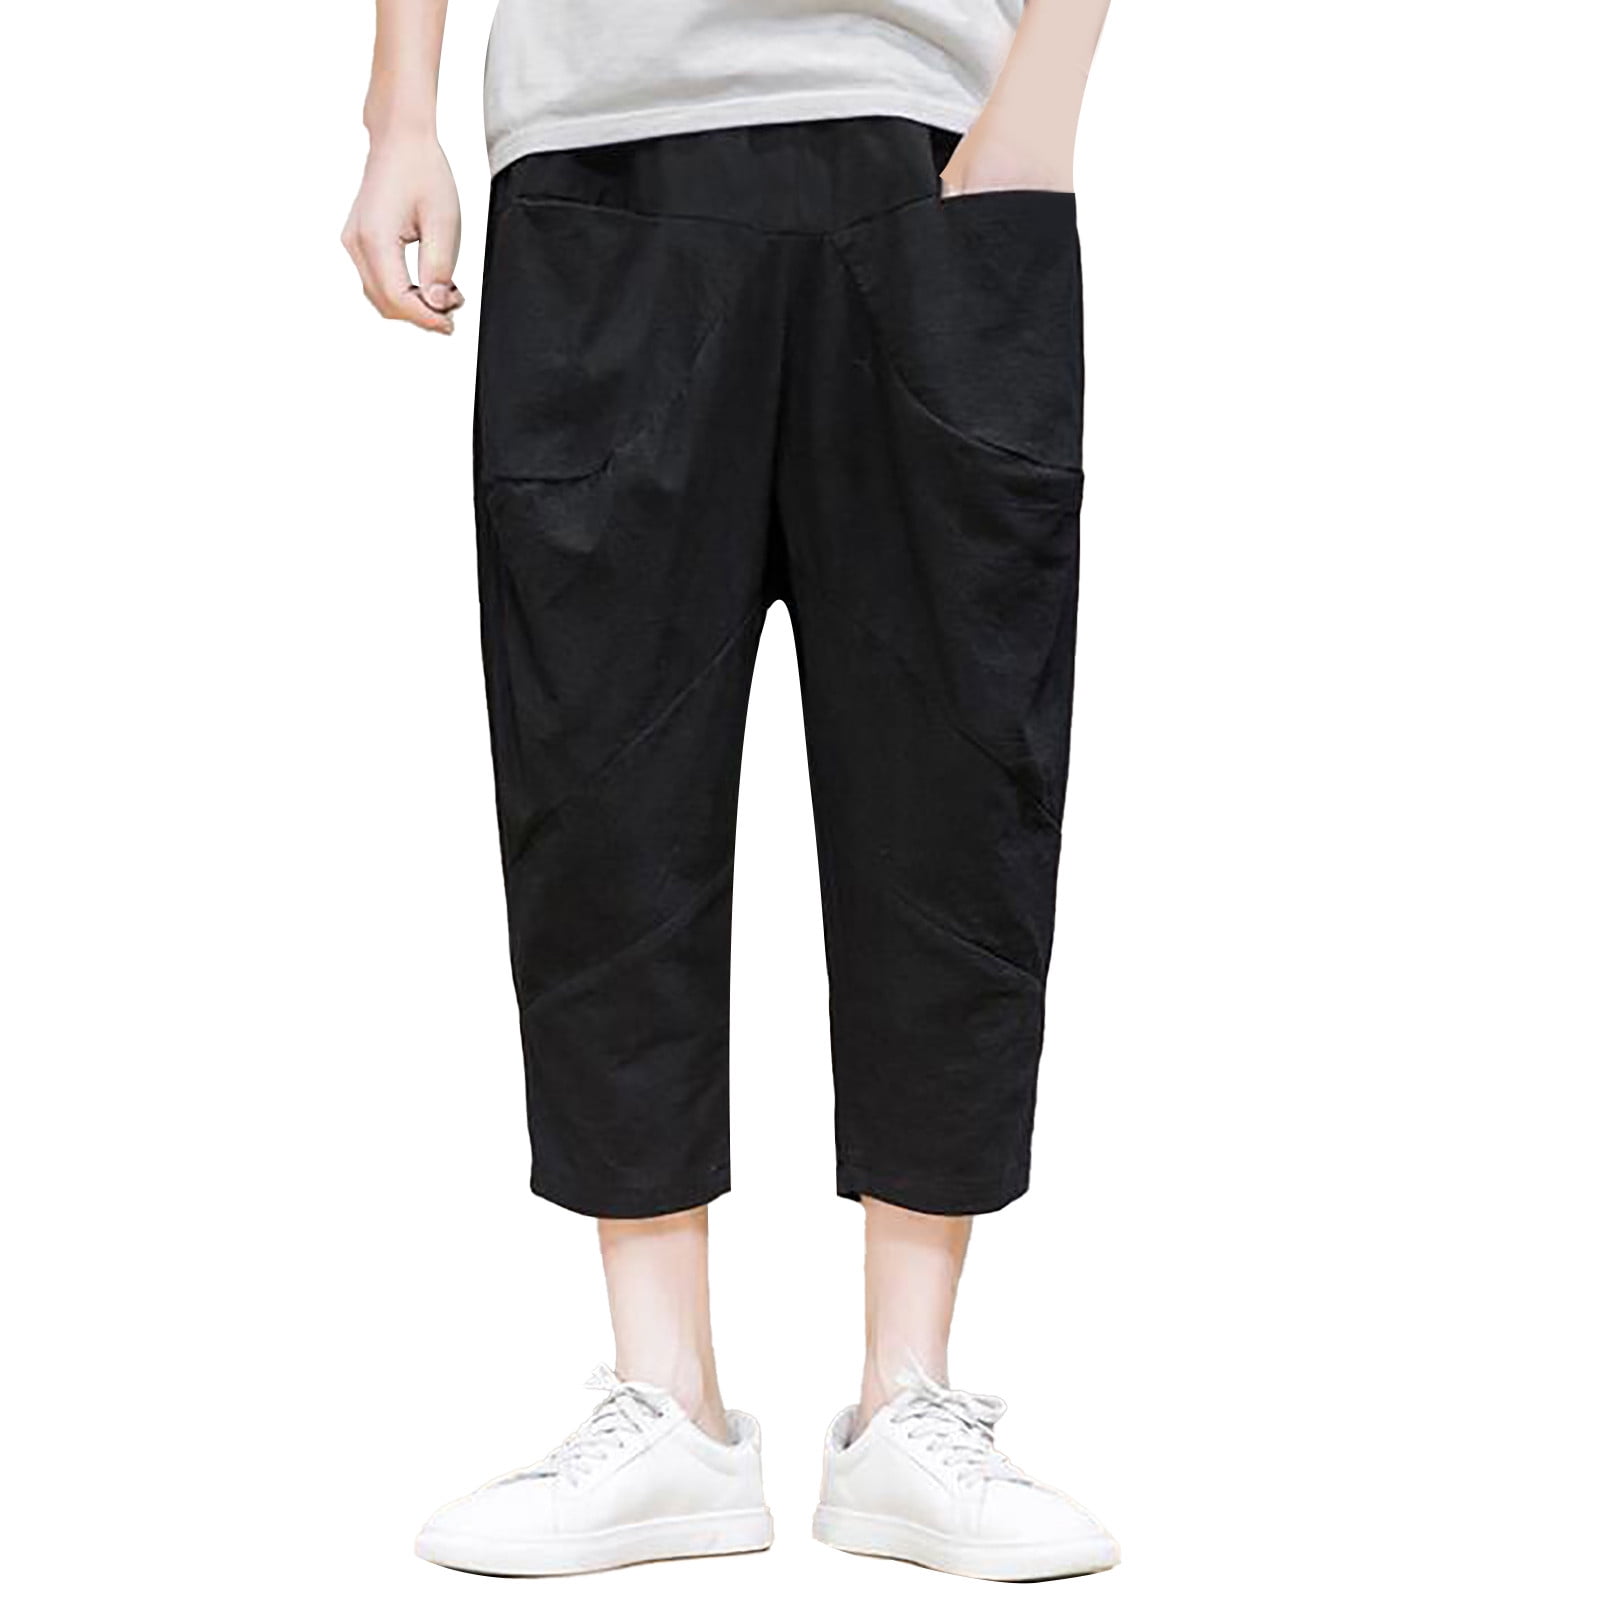 XQXCL Mens Cotton Linen Capri Pants Light Loose 3/4 Long Shorts Elastic ...